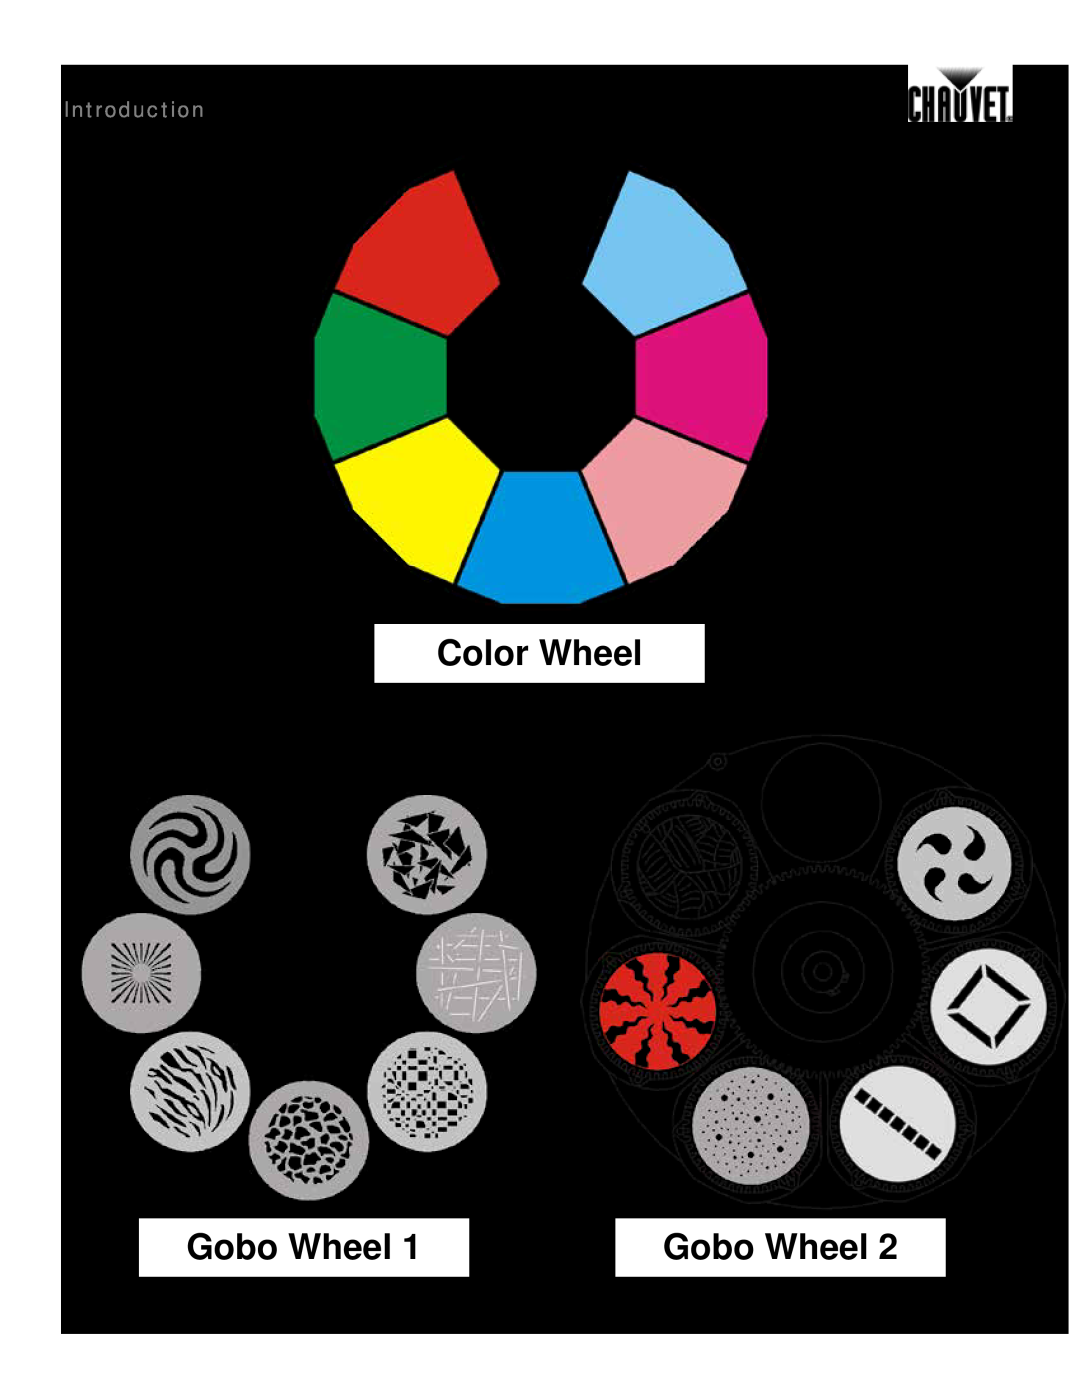 Chauvet user manual Color Wheel, Gobo Wheel, Introduction, Q-Spot 560-LEDUser Manual Rev 